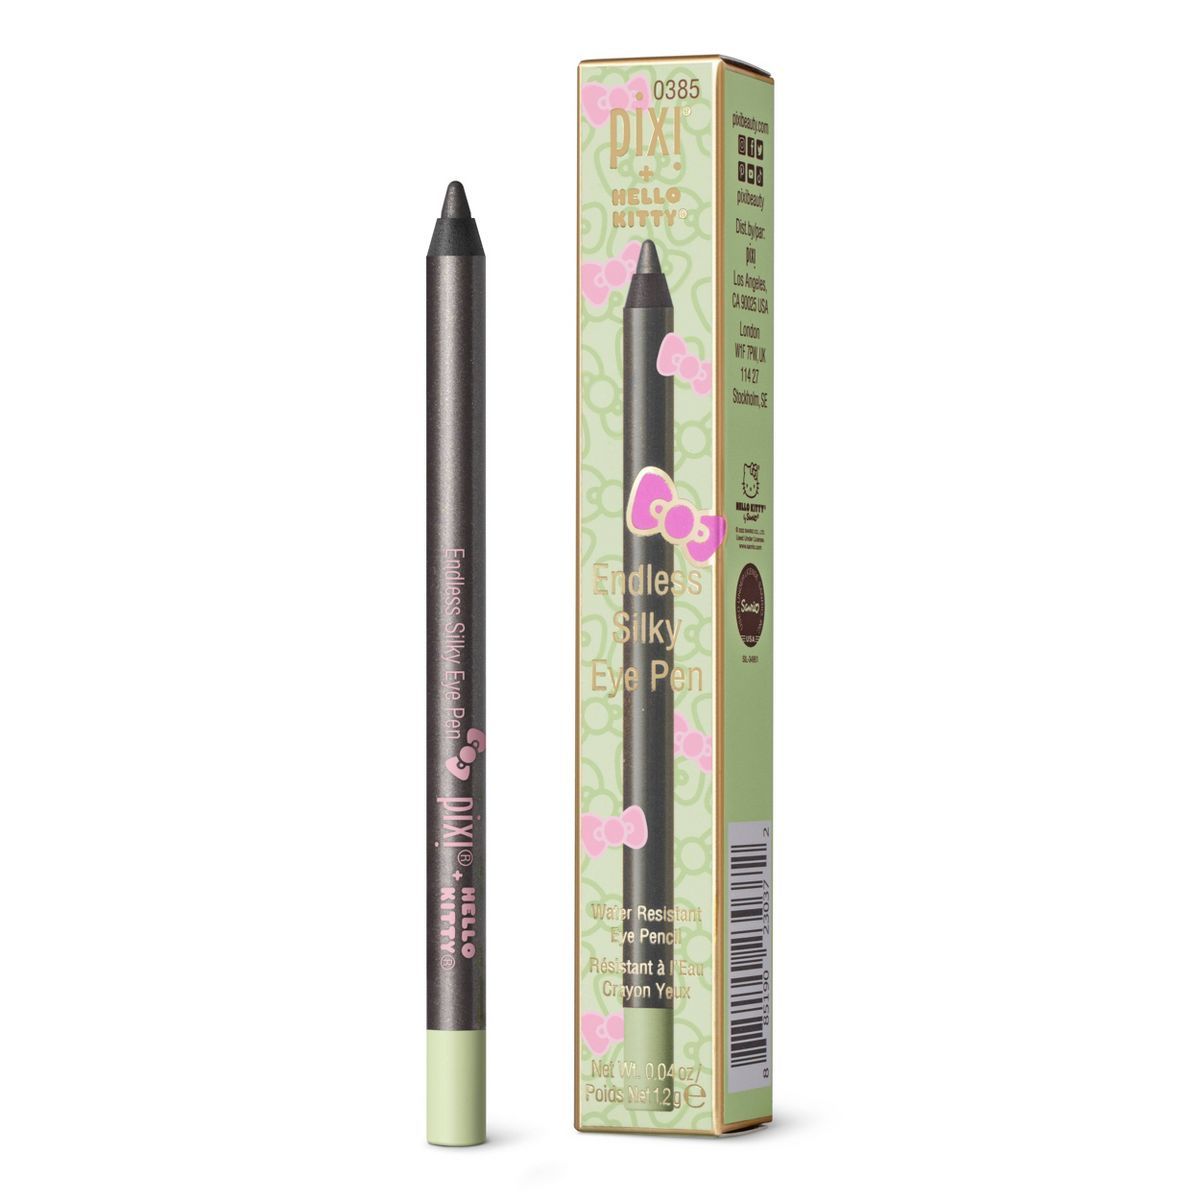 Pixi + Hello Kitty Endless Silky Waterproof Eyeliner Pen - London Fog - 0.04oz | Target